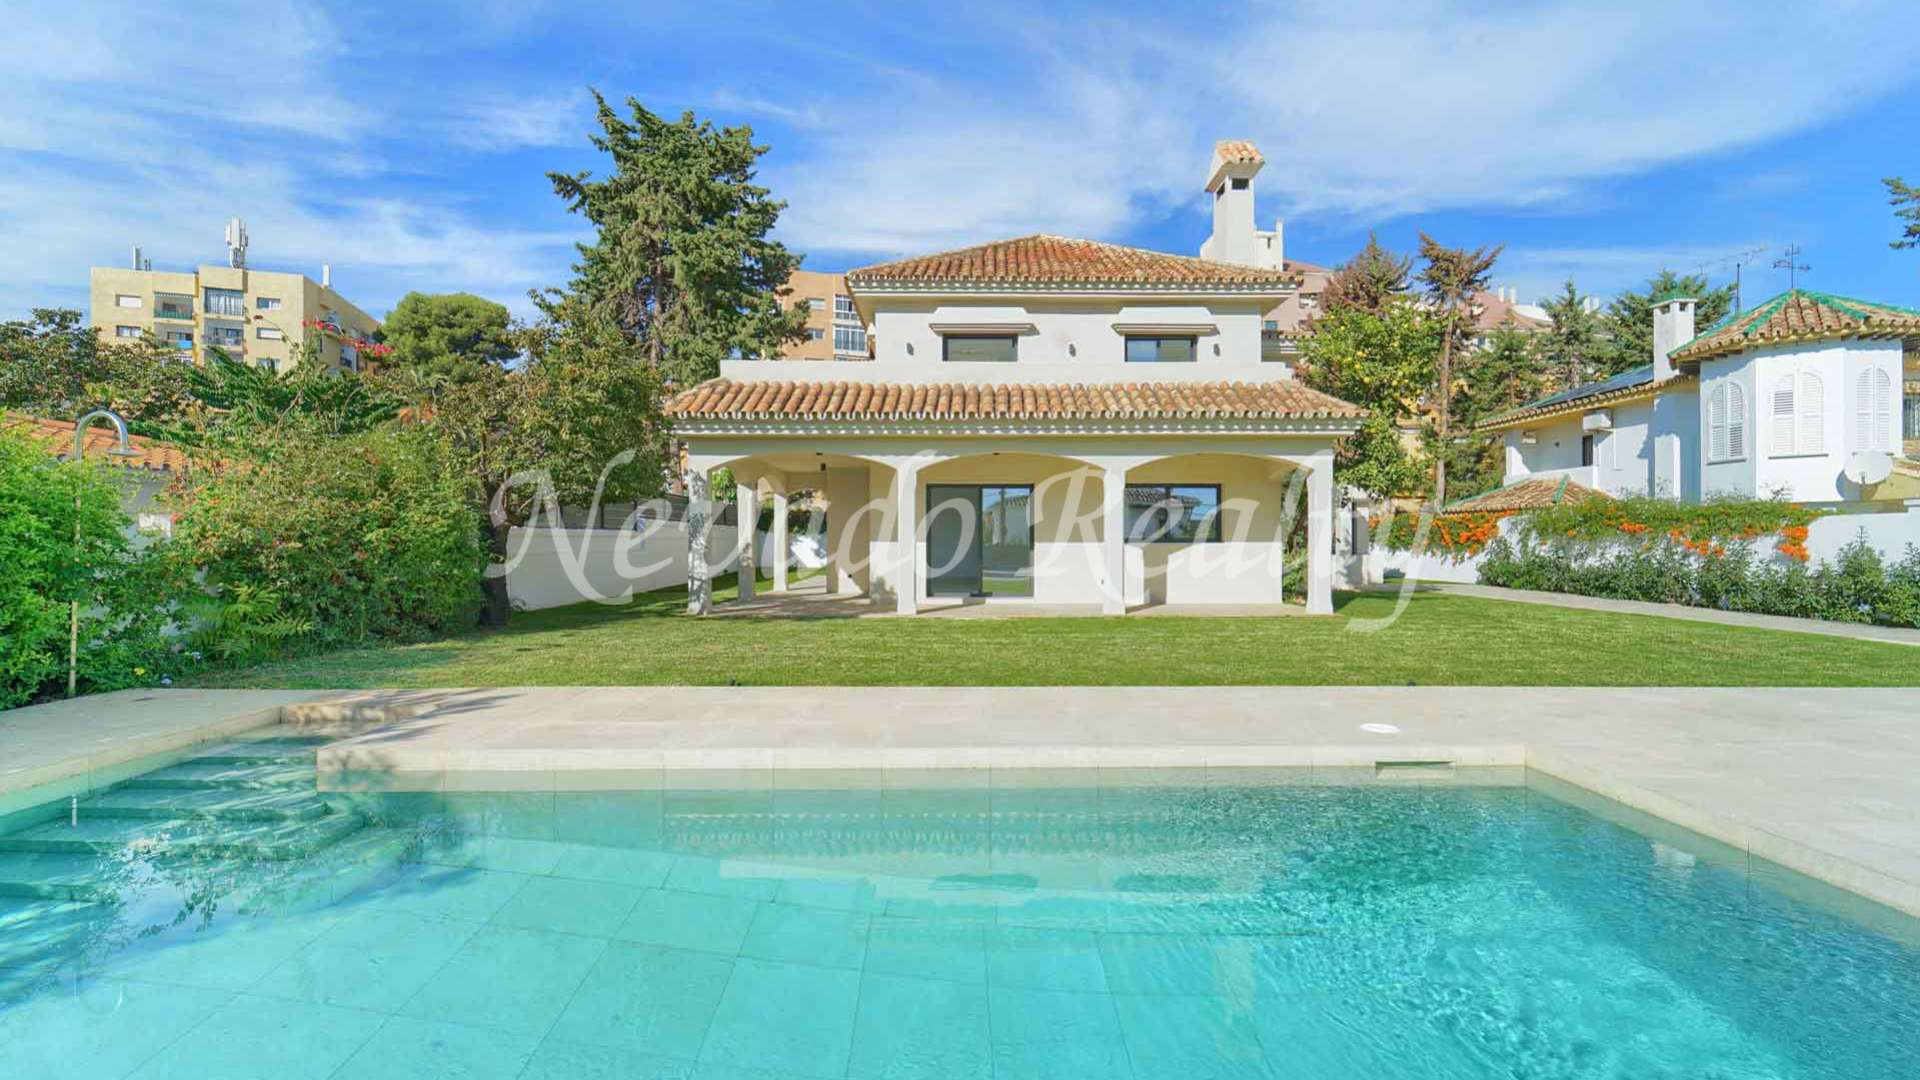 Villa for sale in Marbella centre, recently renovated